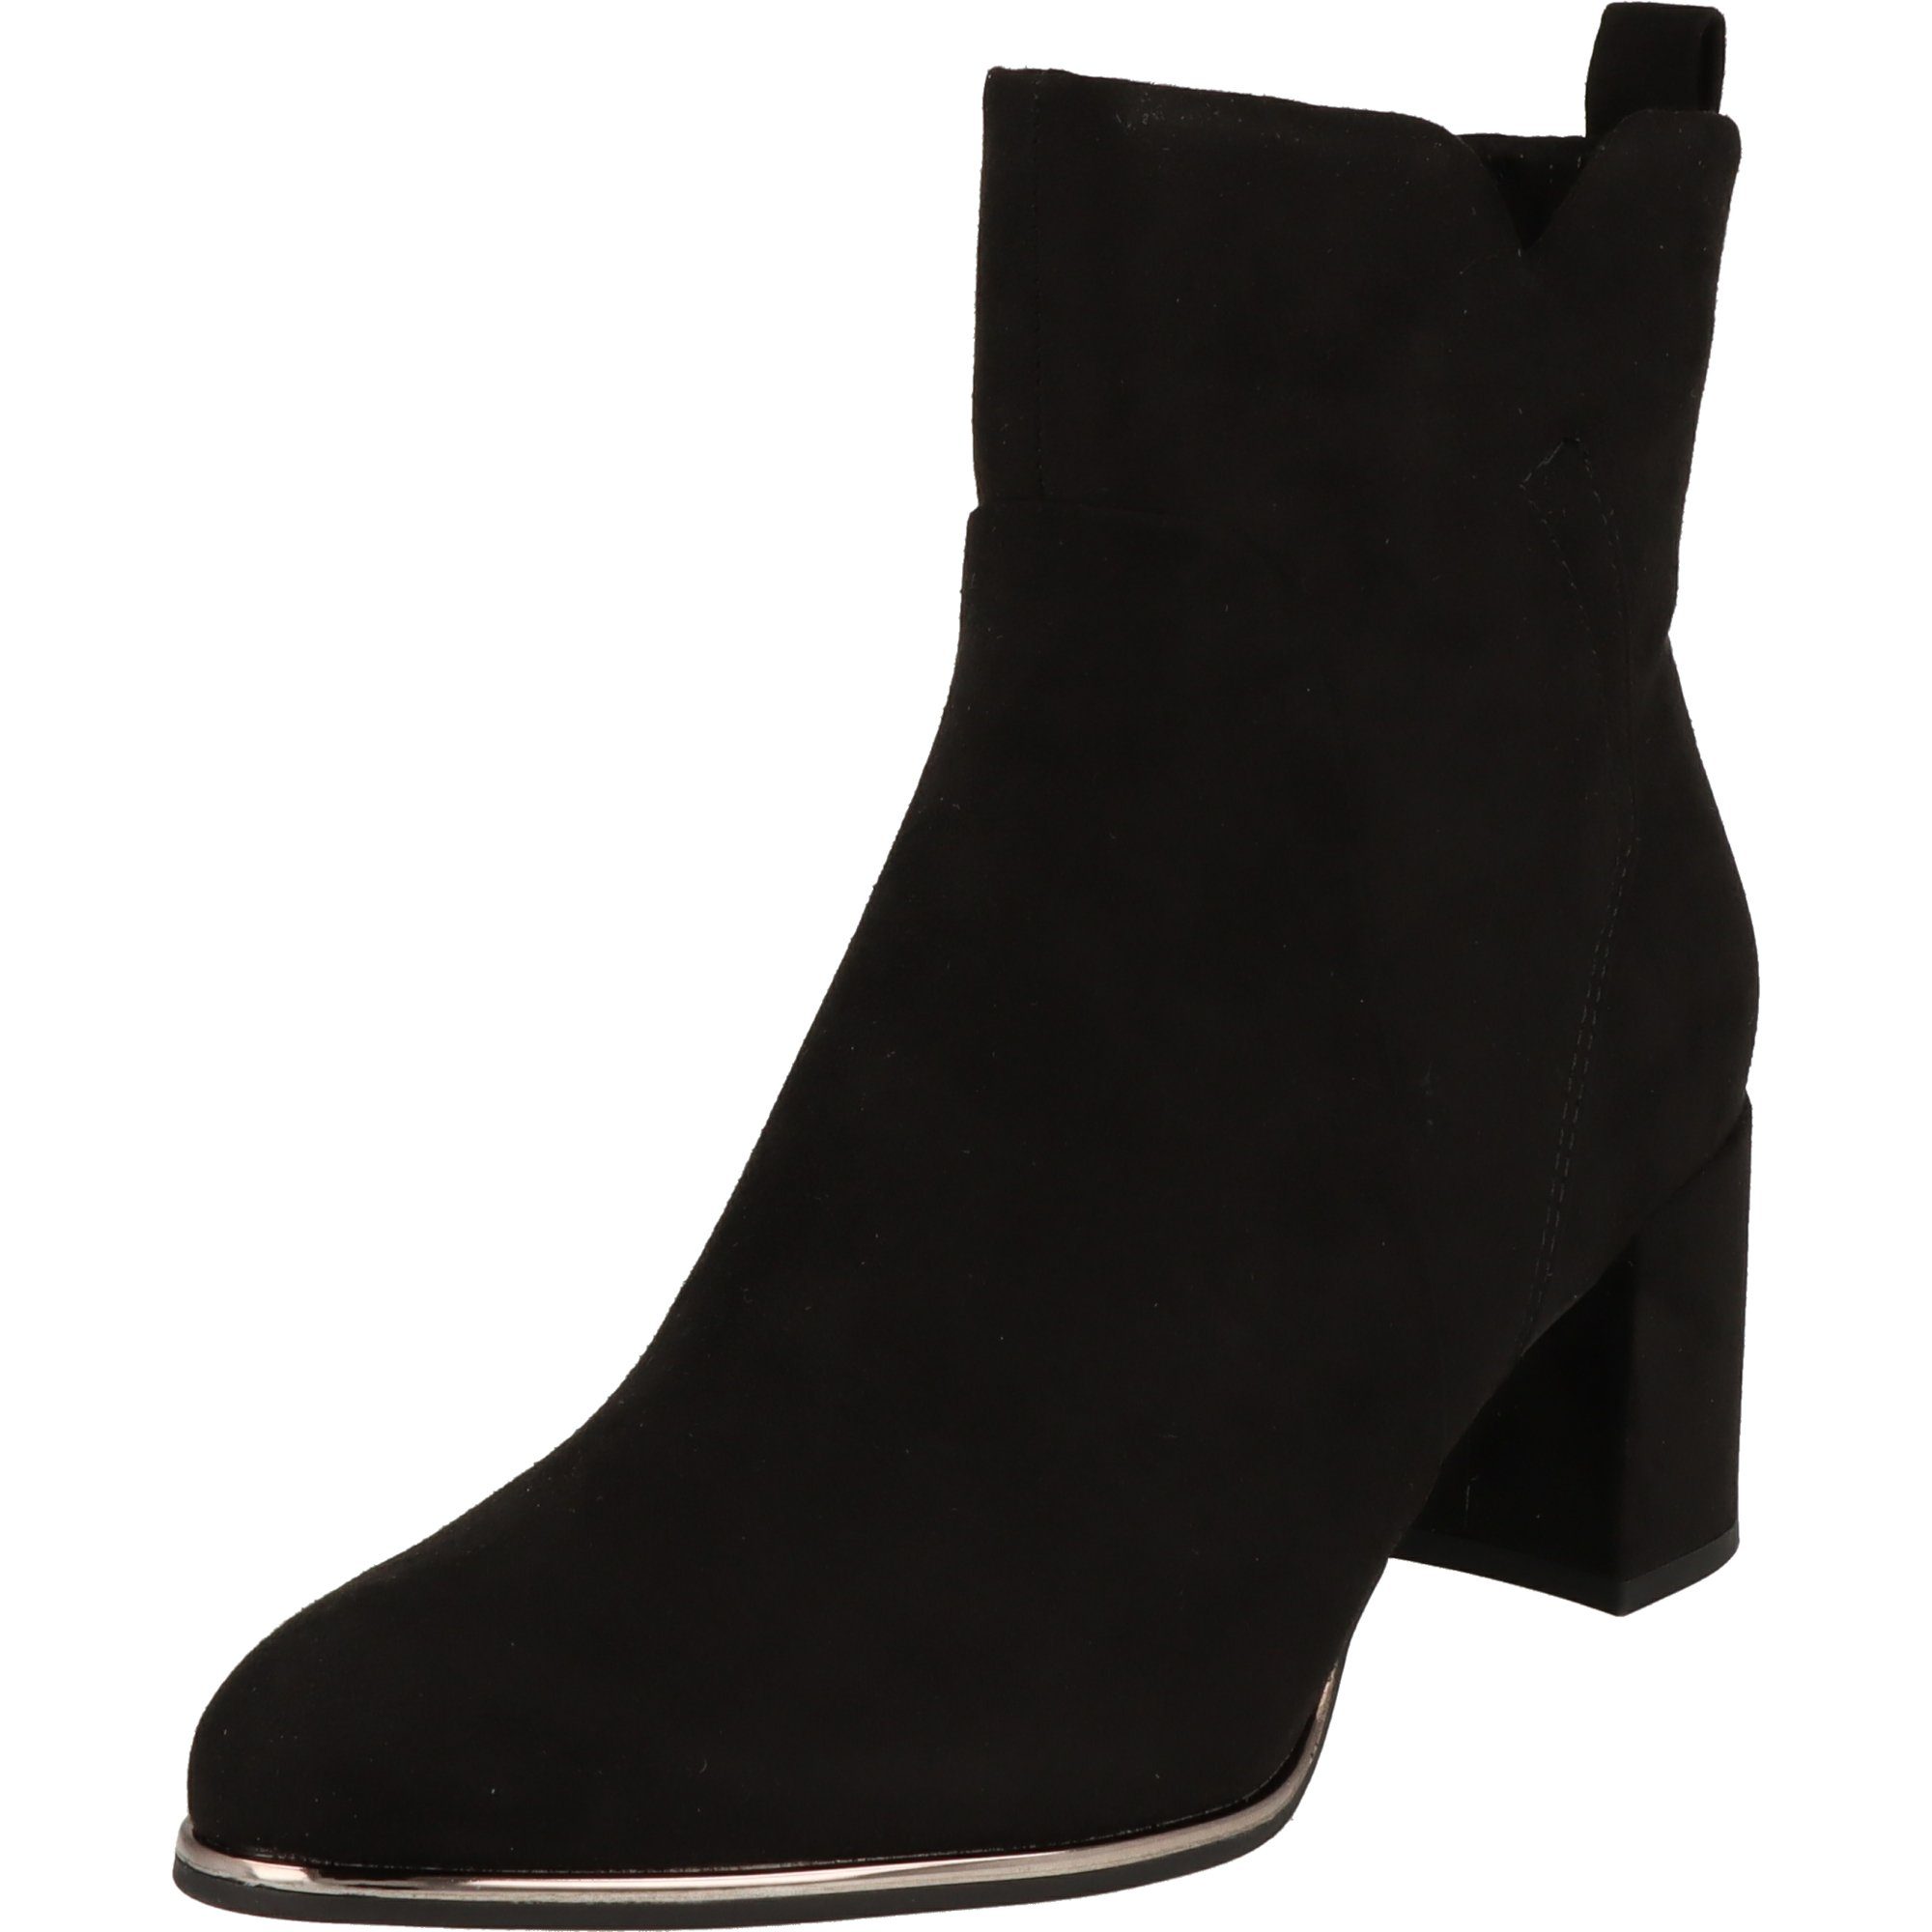 MARCO TOZZI 2-25095-41 Damen Schuhe elegante High-Heel-Stiefelette Reißverschluss Black